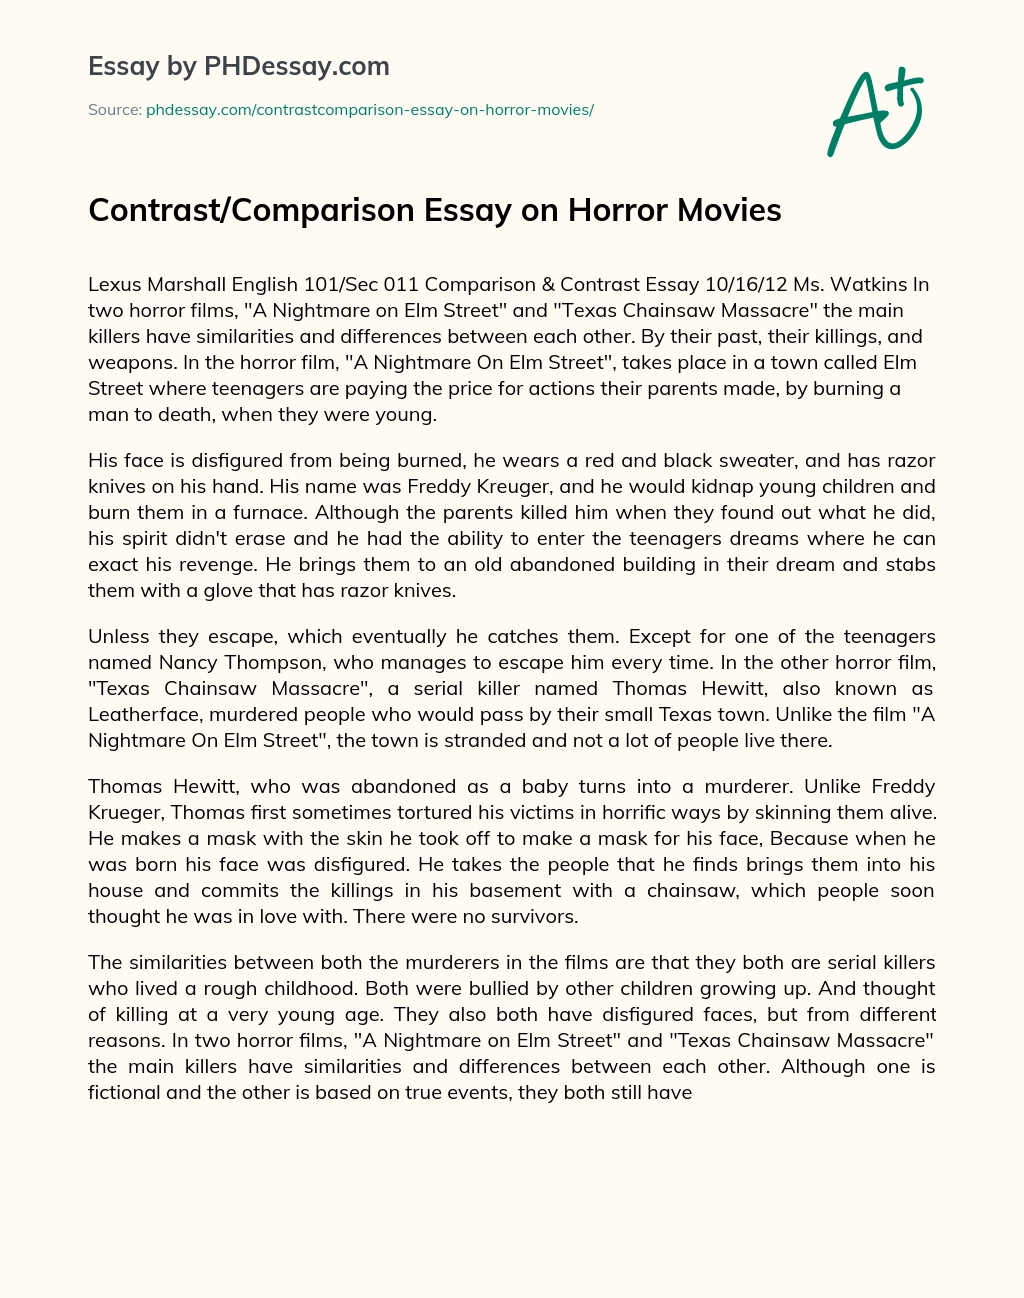 Contrast/Comparison Essay on Horror Movies essay